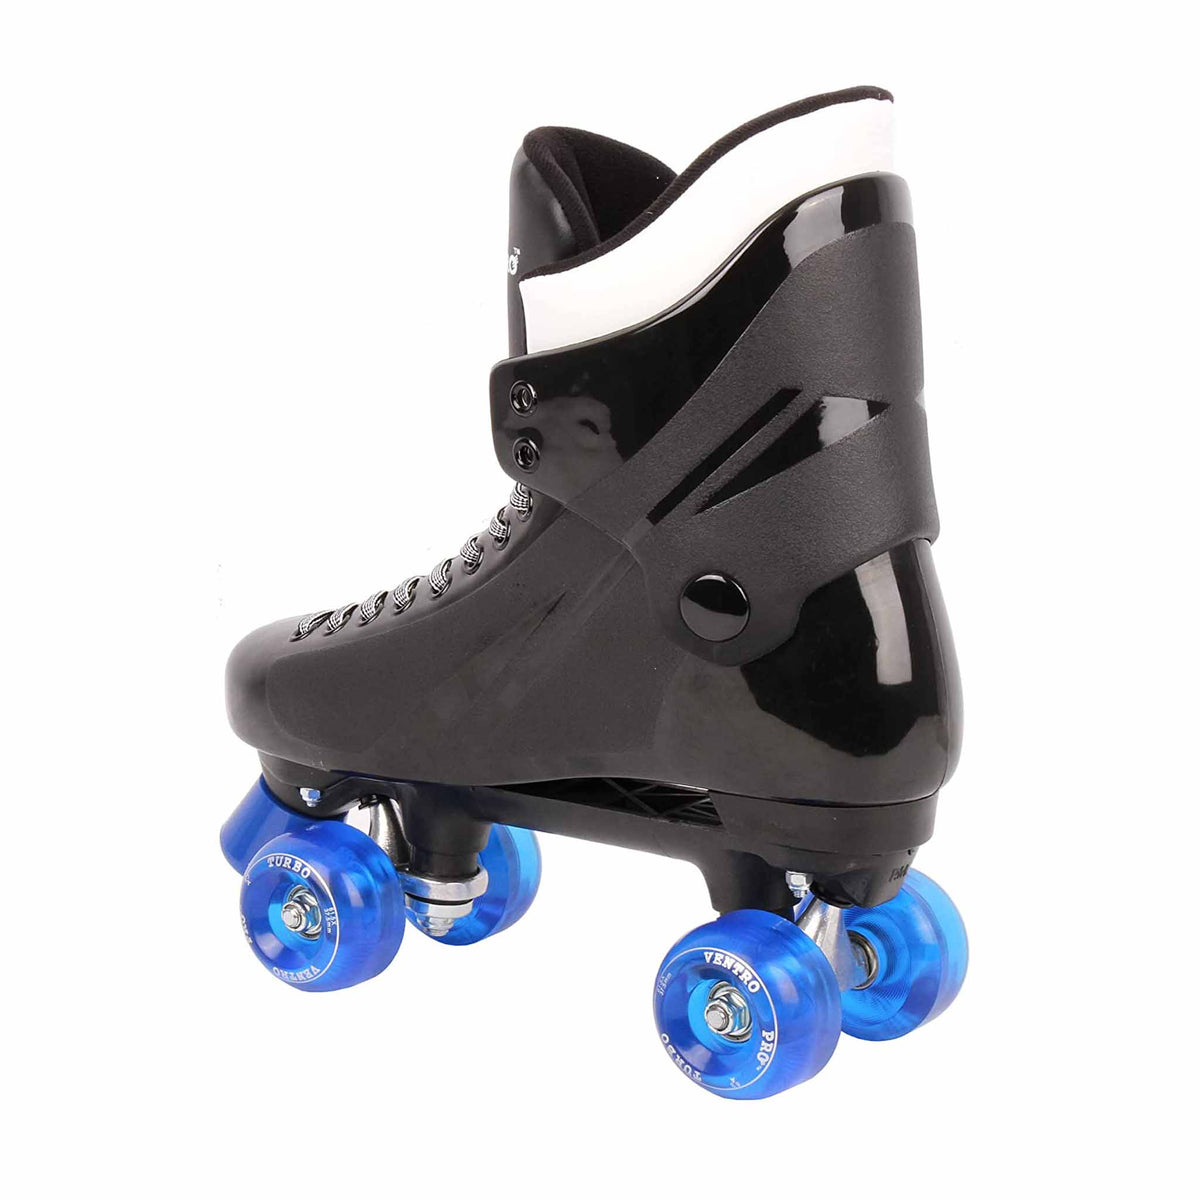 Ventro Pro Turbo Quad Roller Skates - Roller Skates | JT Skate